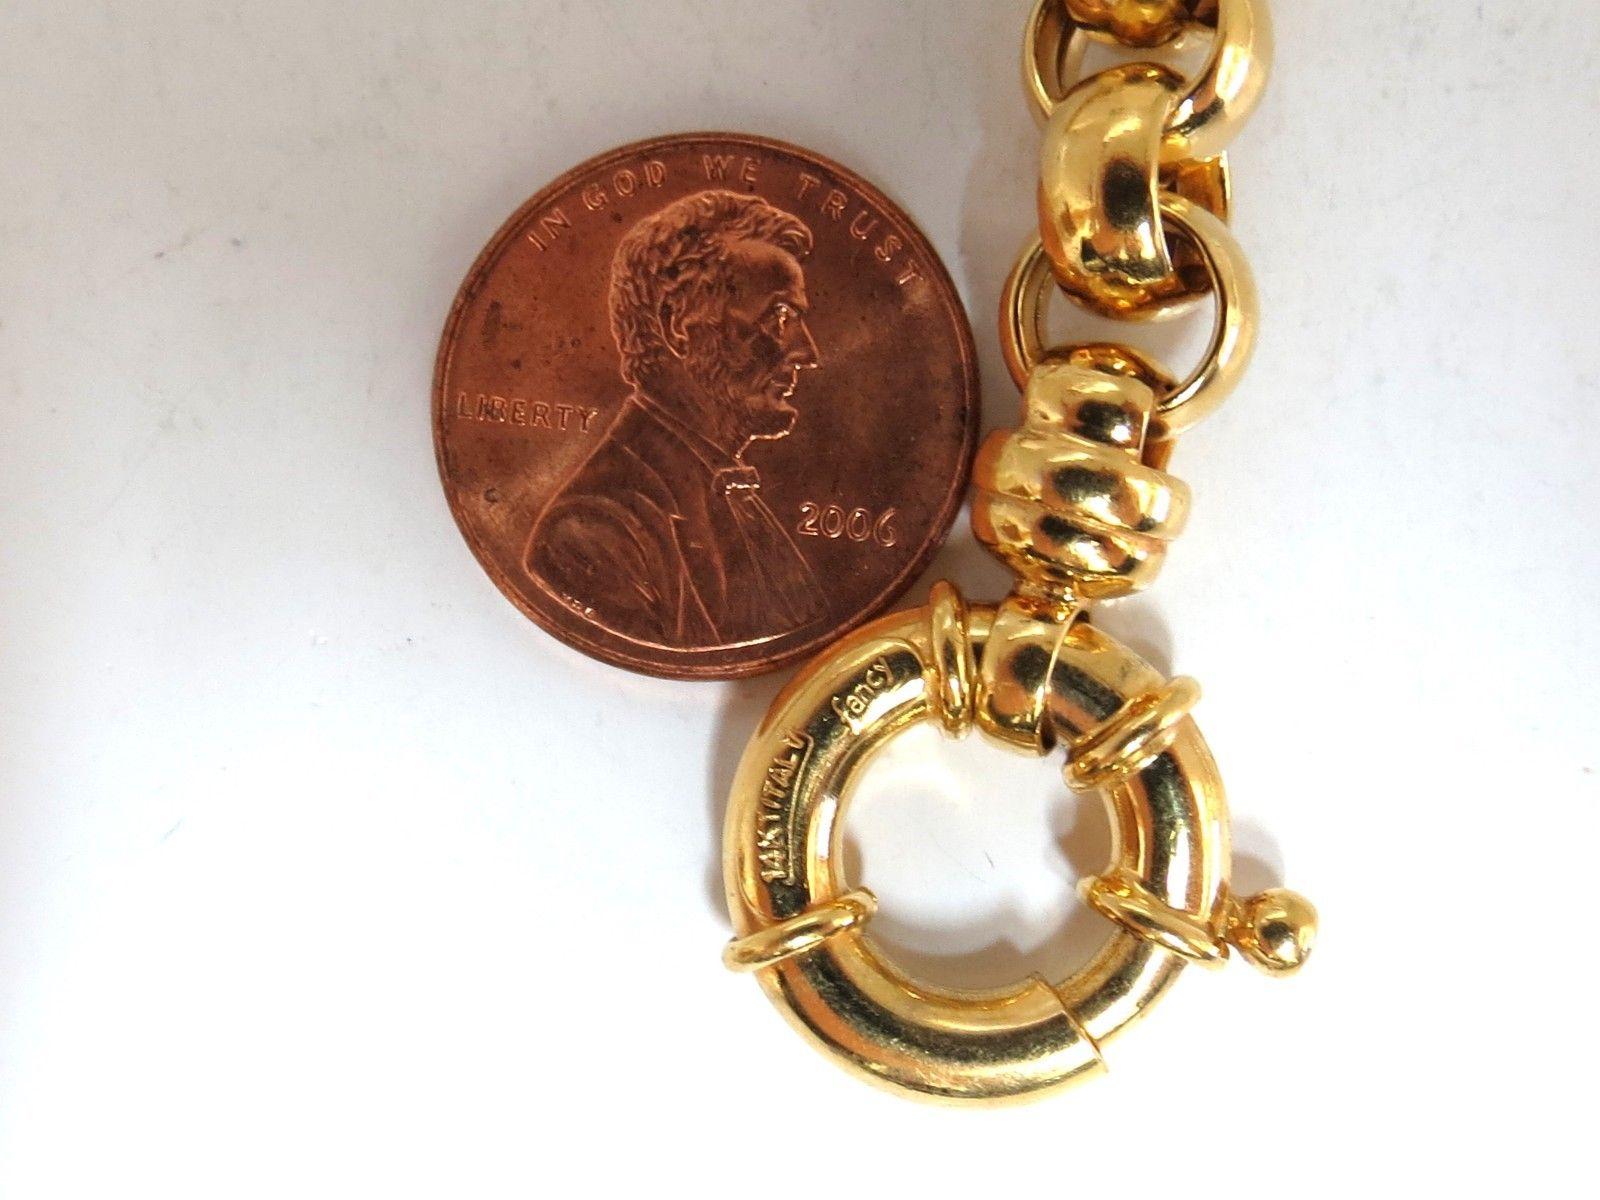 Women's or Men's 14 Karat Gold Circles Toggle Link Necklace